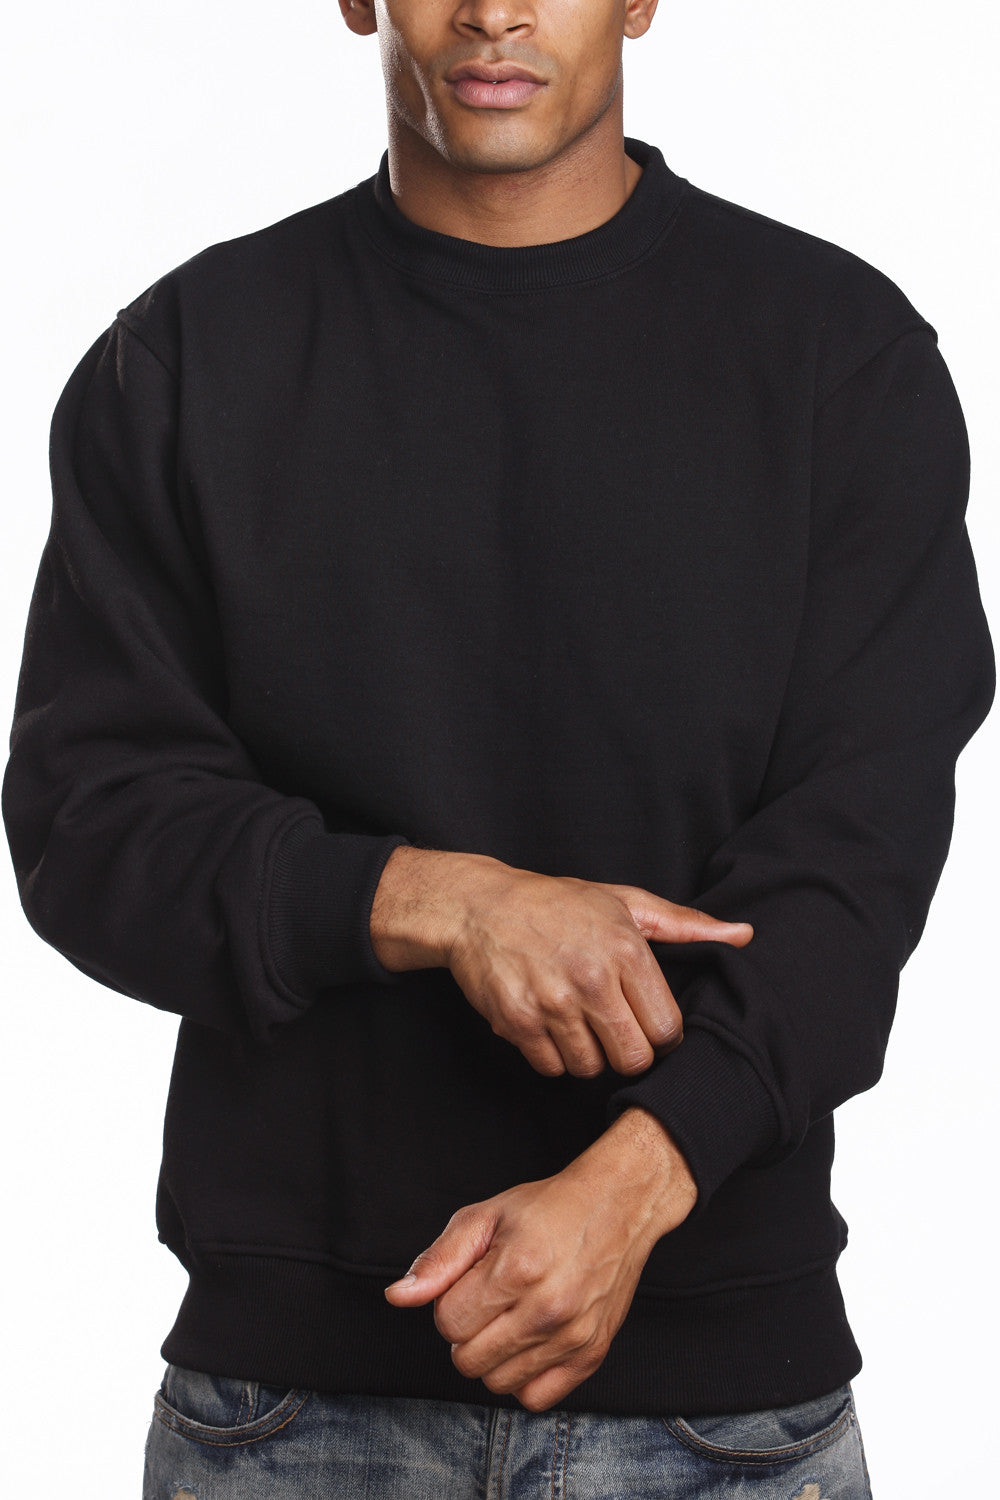 Pro Standard Bristle Crew Sweatshirt in Black Size Large | Cavaliers